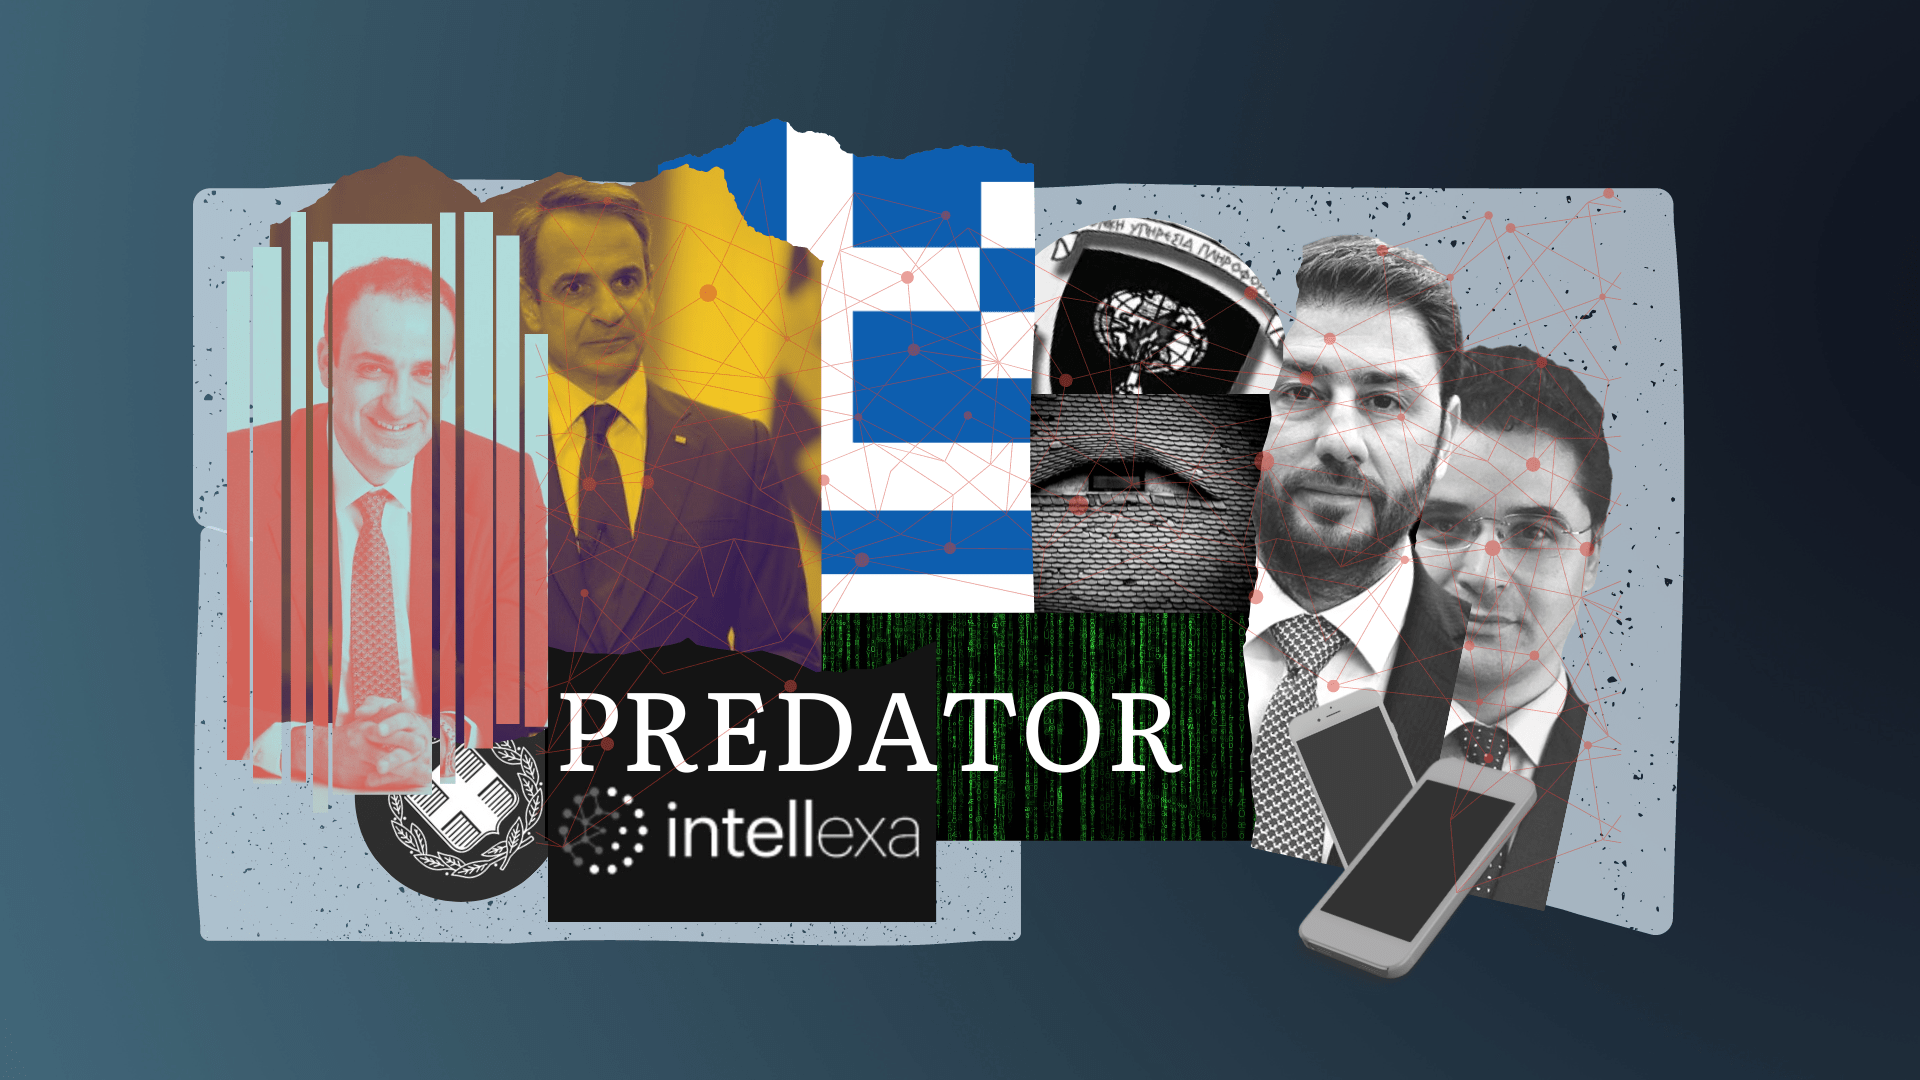 PredatorGate: Ο Γρηγόρης Δημητριάδης κάνει αγωγές, εμείς συνεχίζουμε την έρευνα